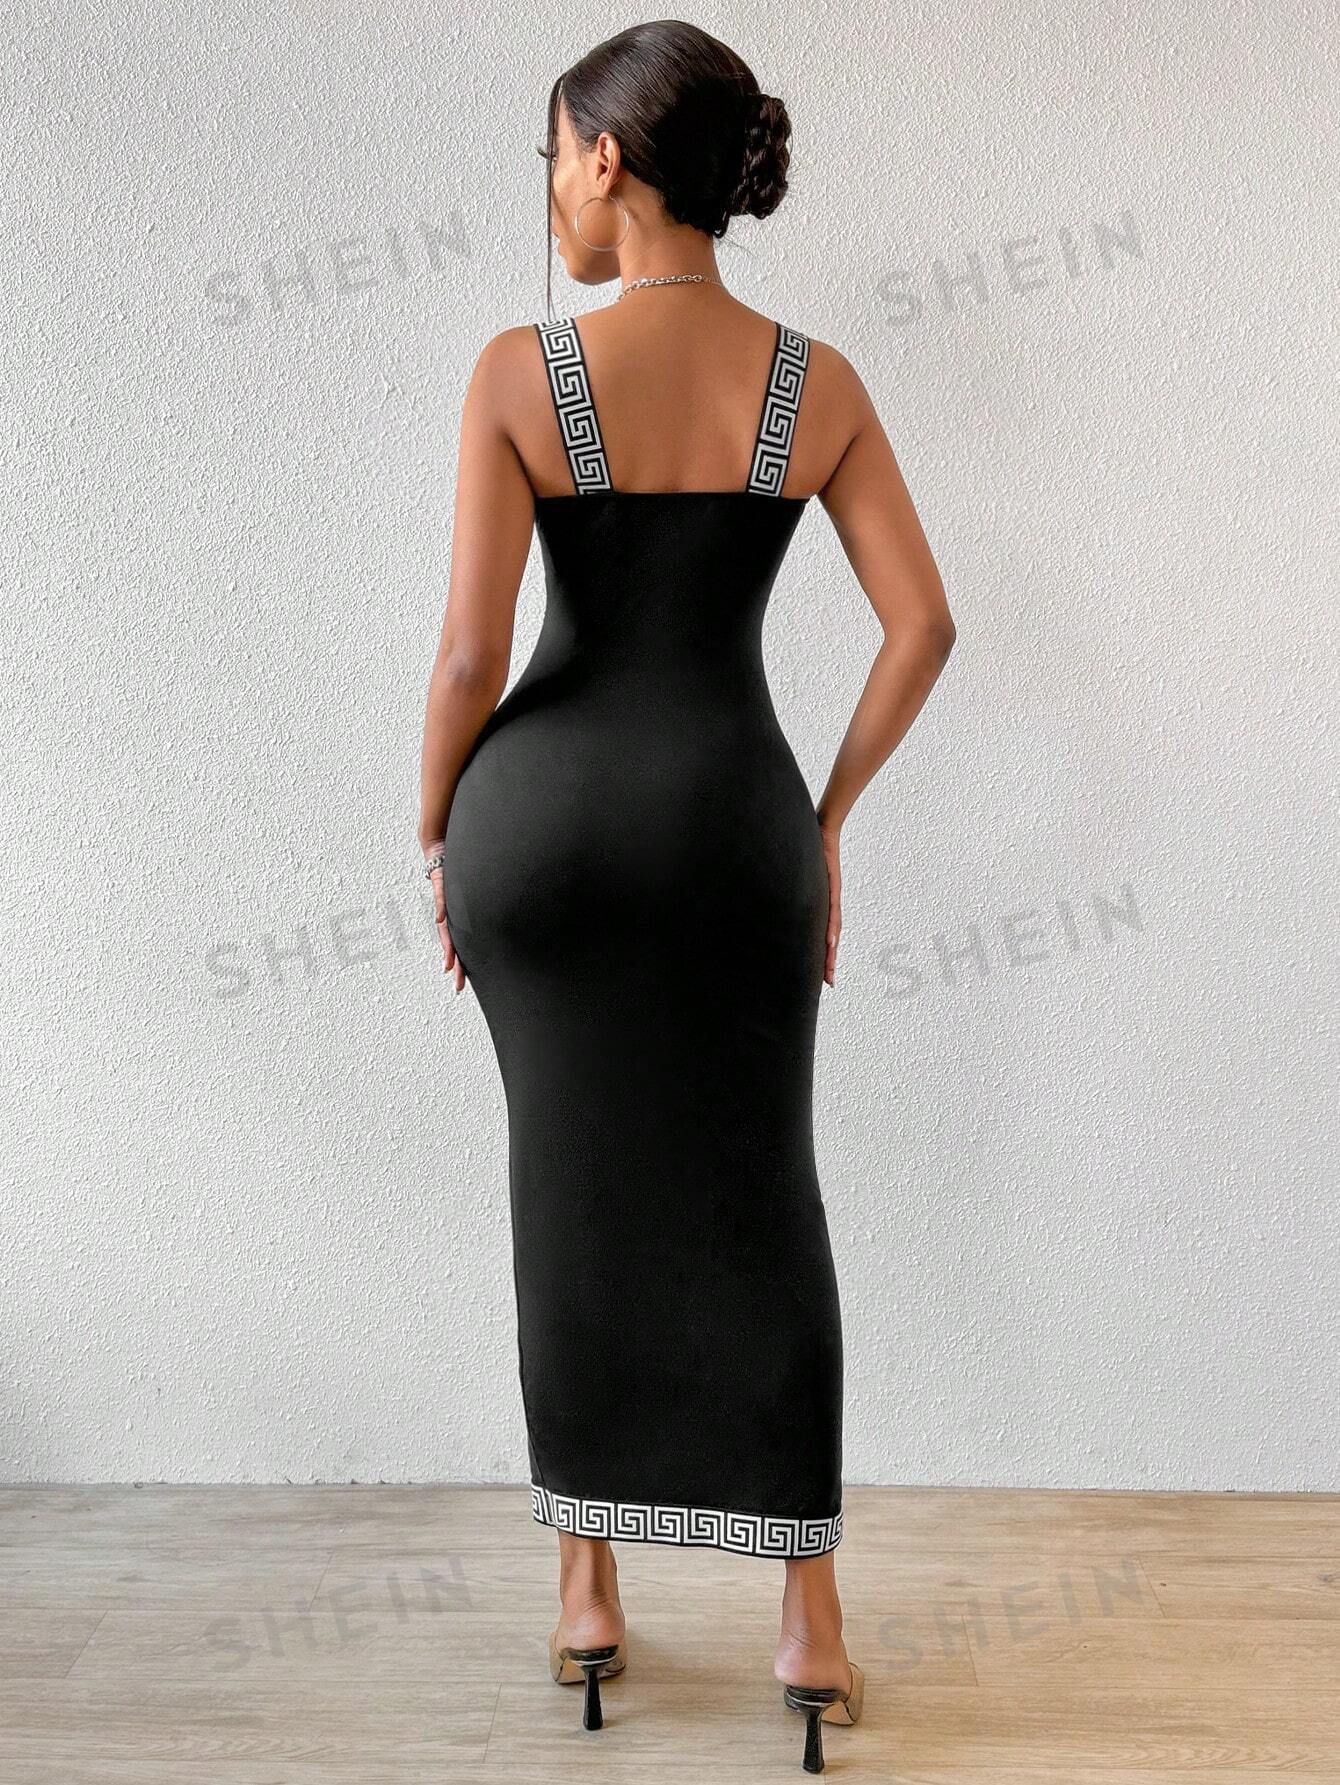 Slayr Ladies' Greek Fret Print Dress - Negative Apparel